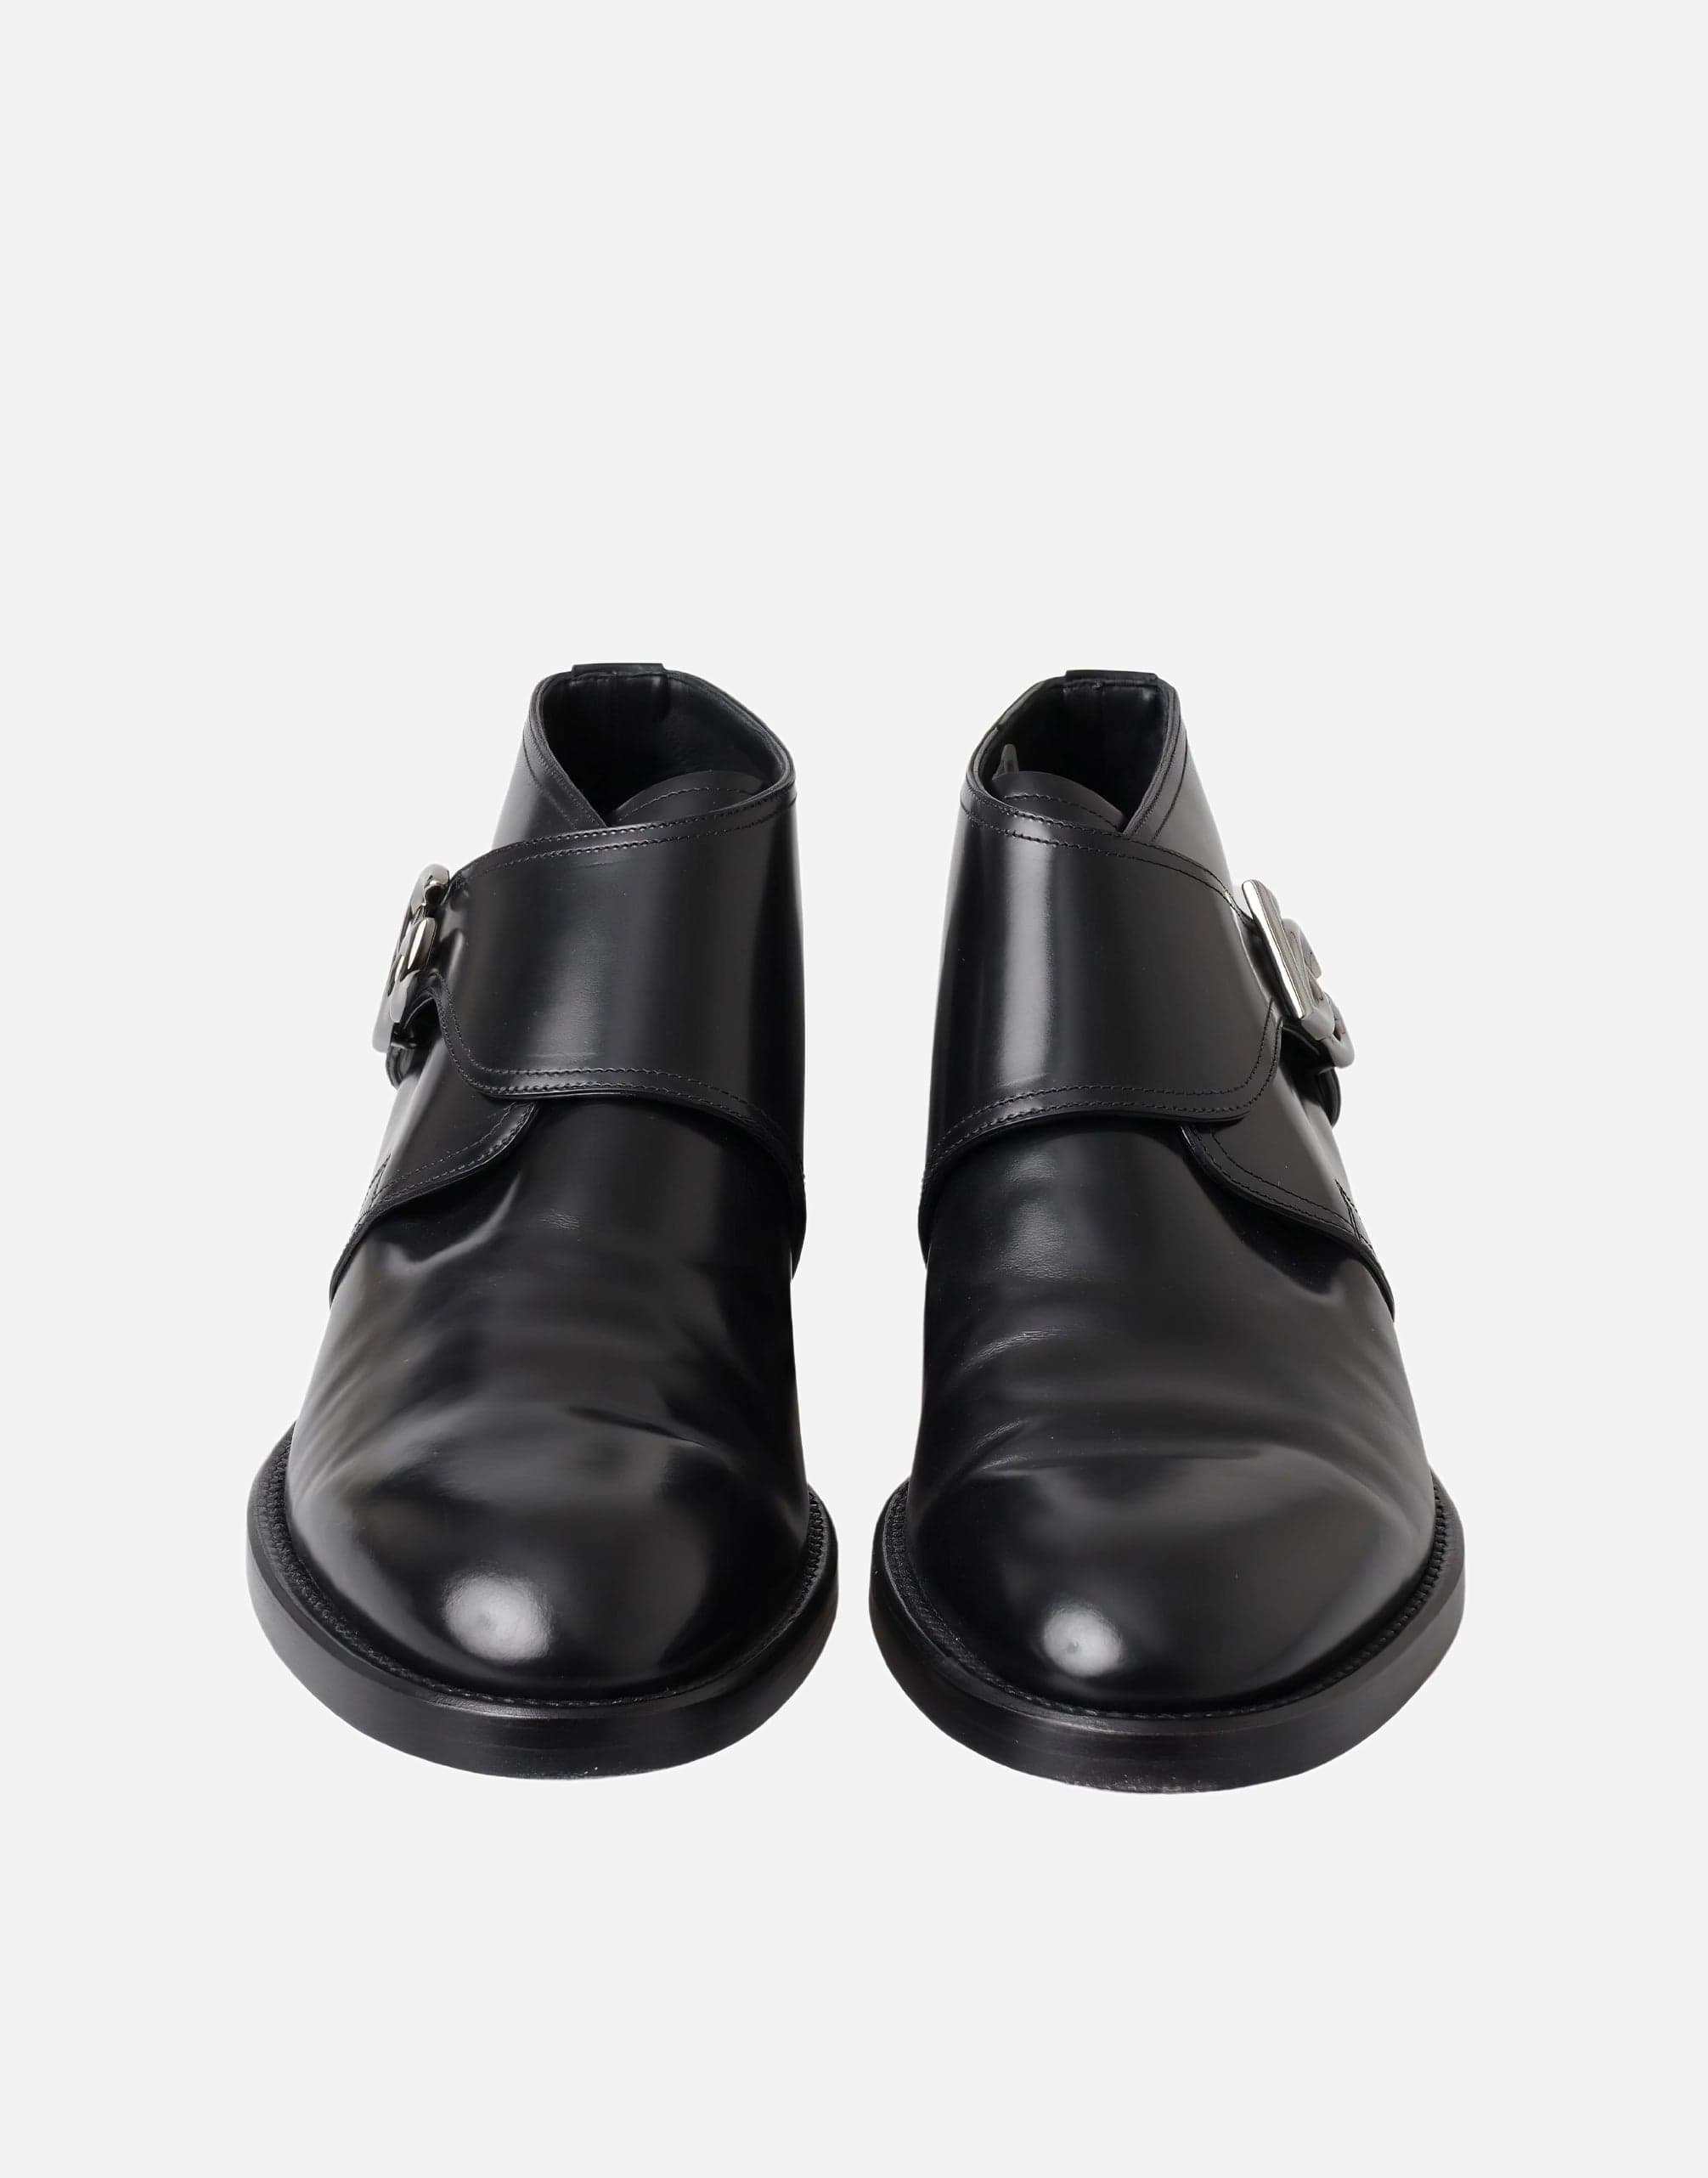 Dolce & Gabbana Black Leather Dress Formal Monk Strap Shoes